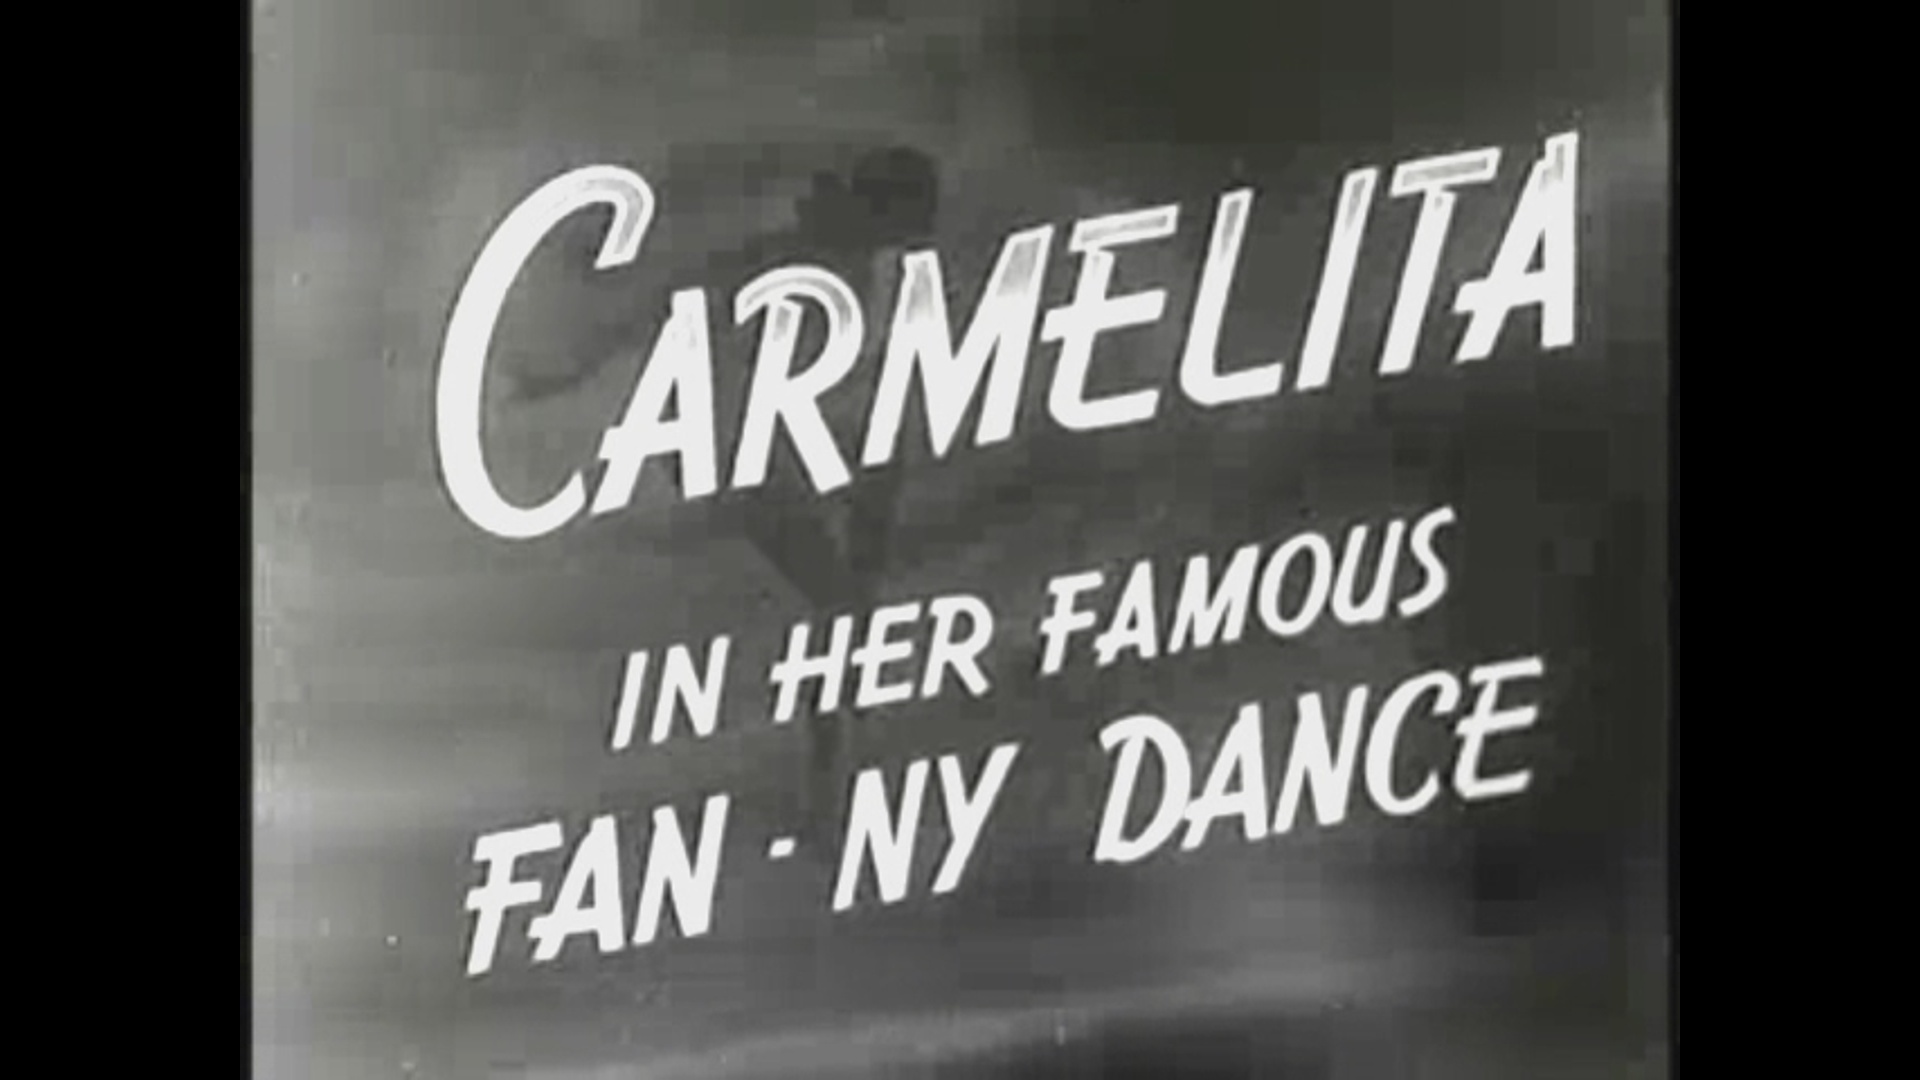 Carmelita Fanny Dance